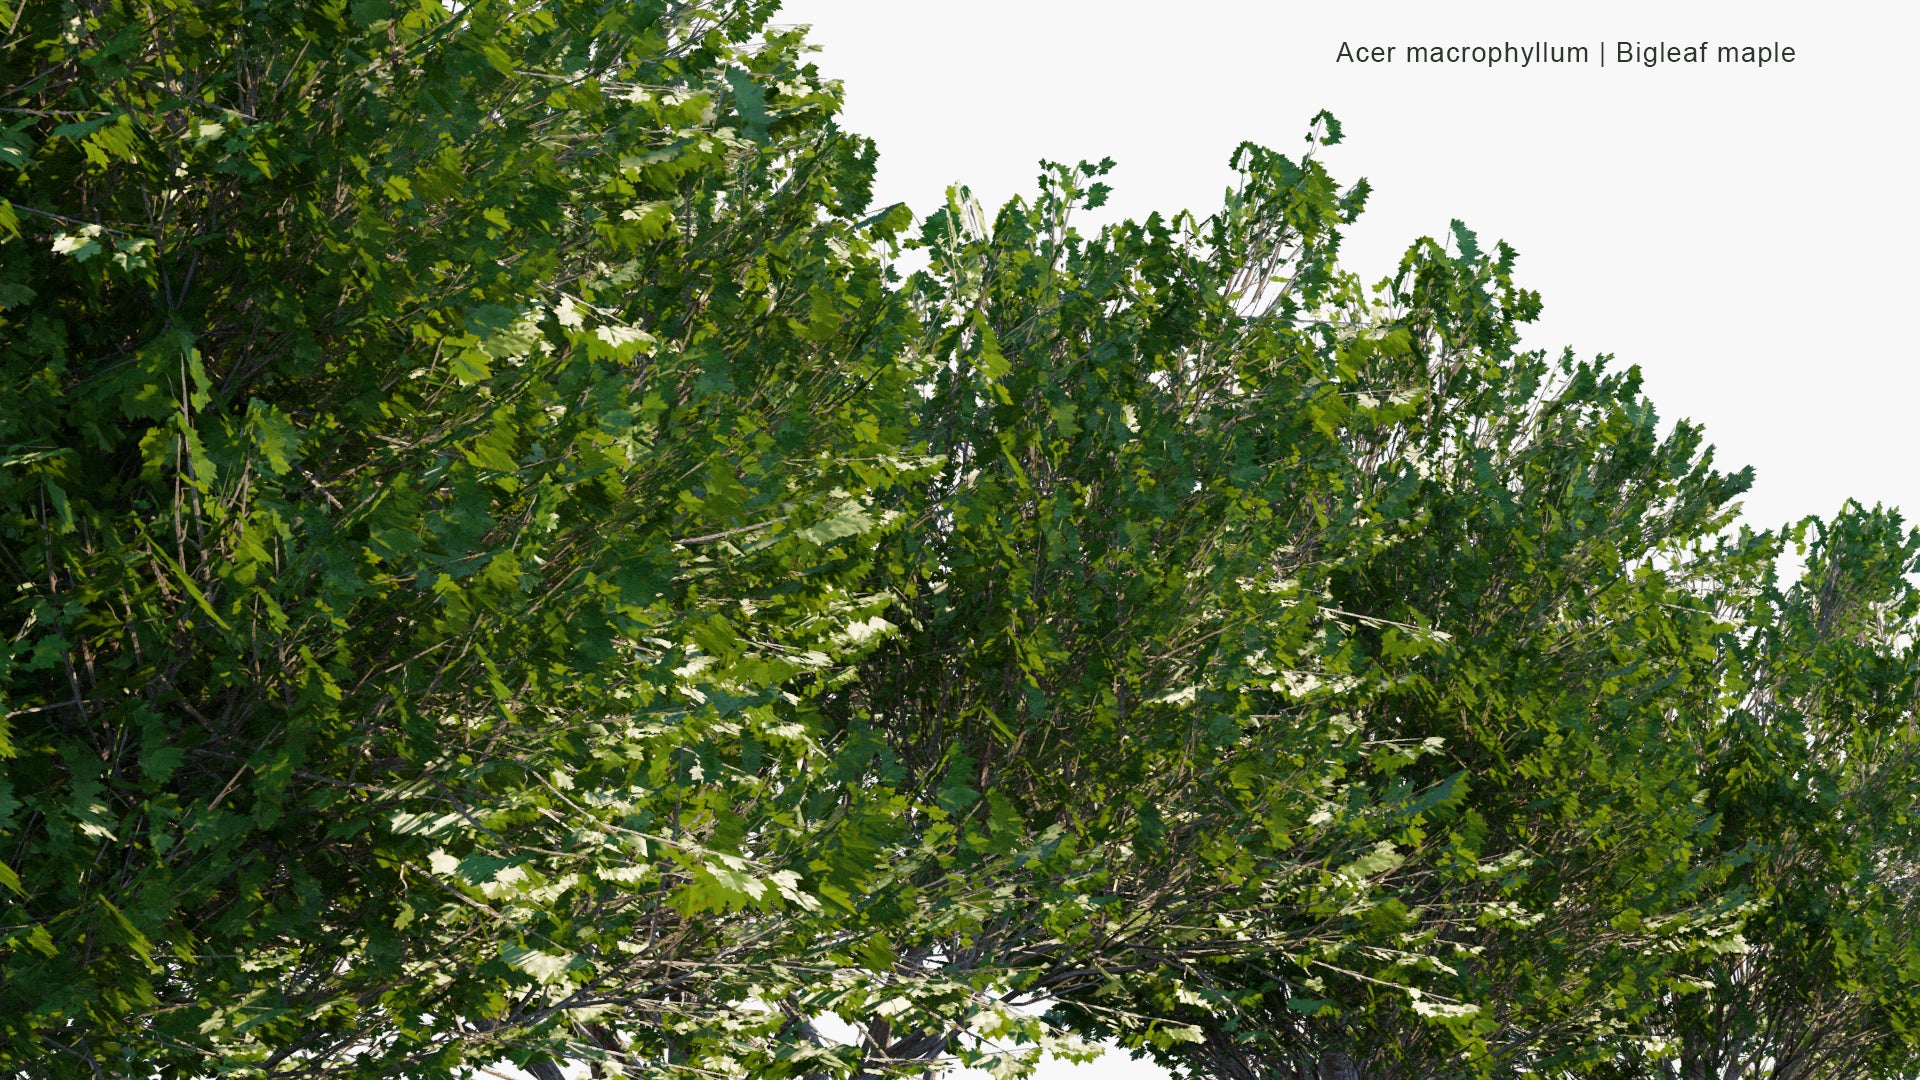 Low Poly Acer Macrophyllum - Bigleaf maple, Oregon Maple (3D Model)